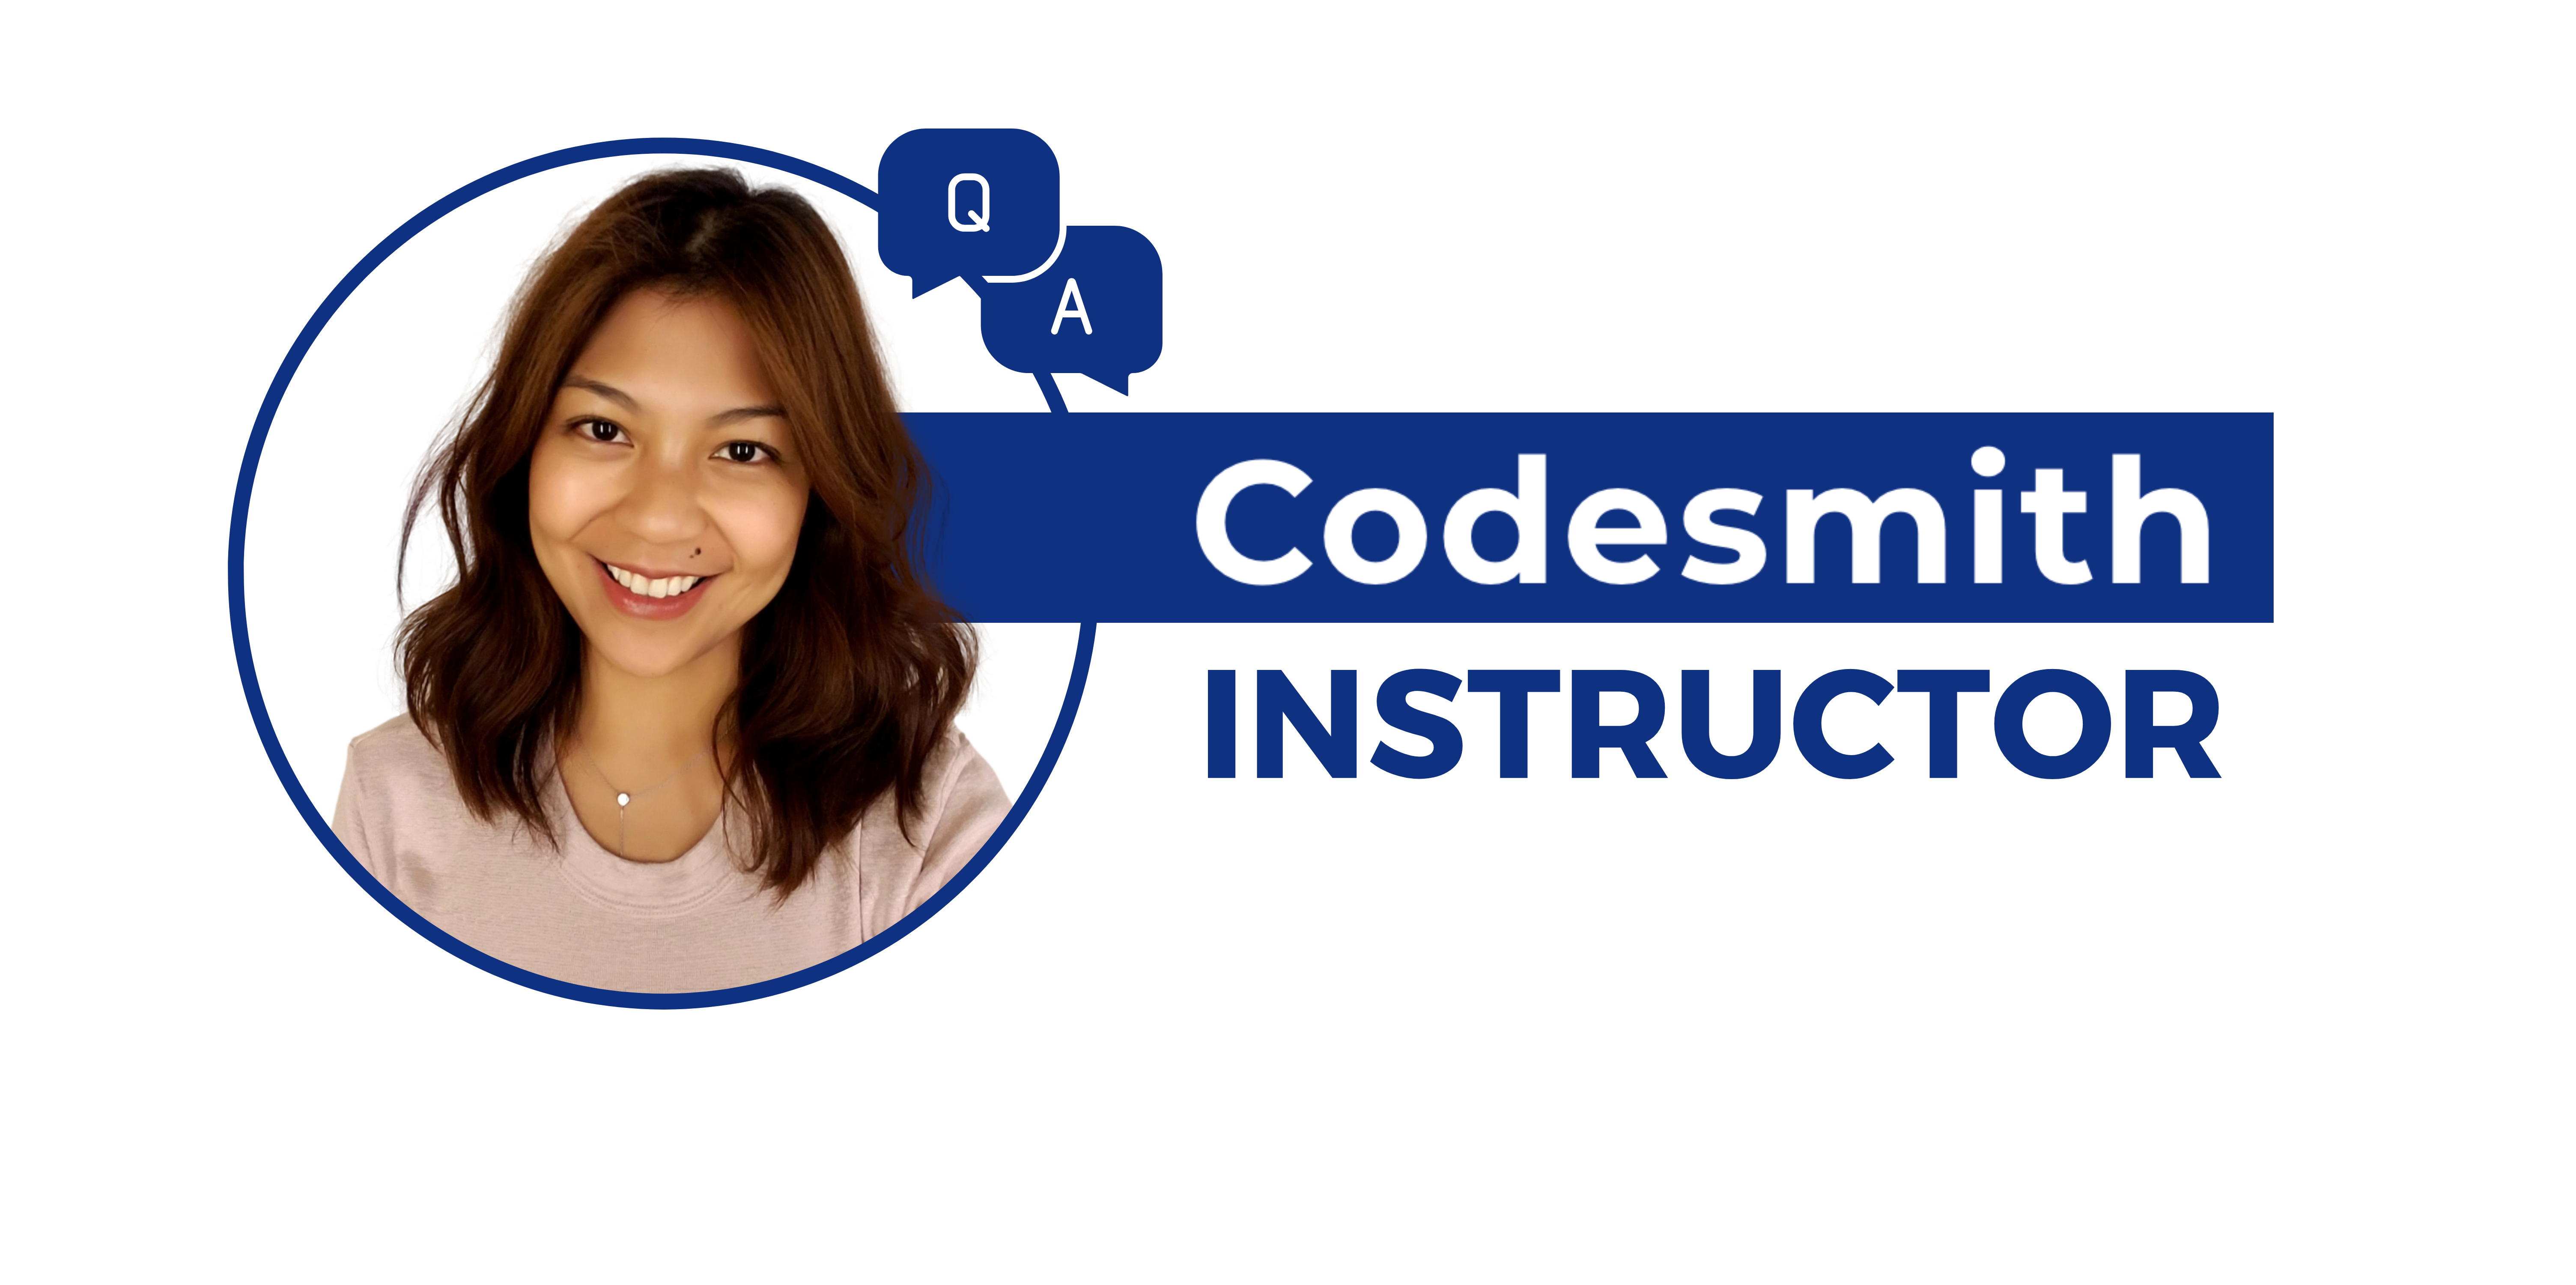 Image of Codesmith instructor Katrina Villanueva with text that reads Codesmith instructor Q&A